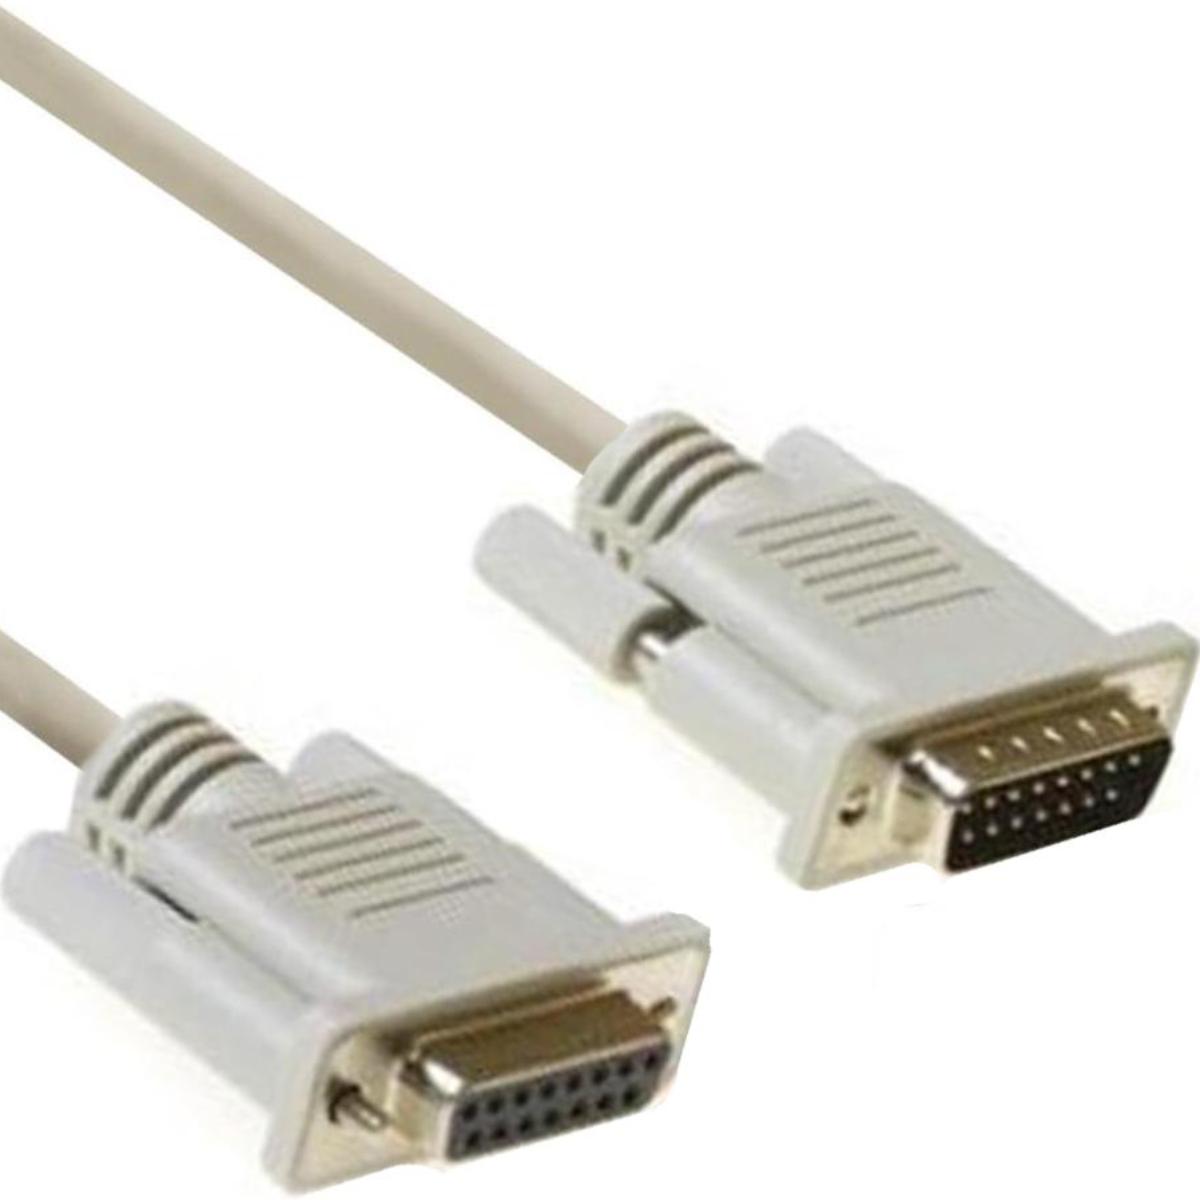 3m Plug-Jack DB15pol., Data cable wiring 1:1 - ECO